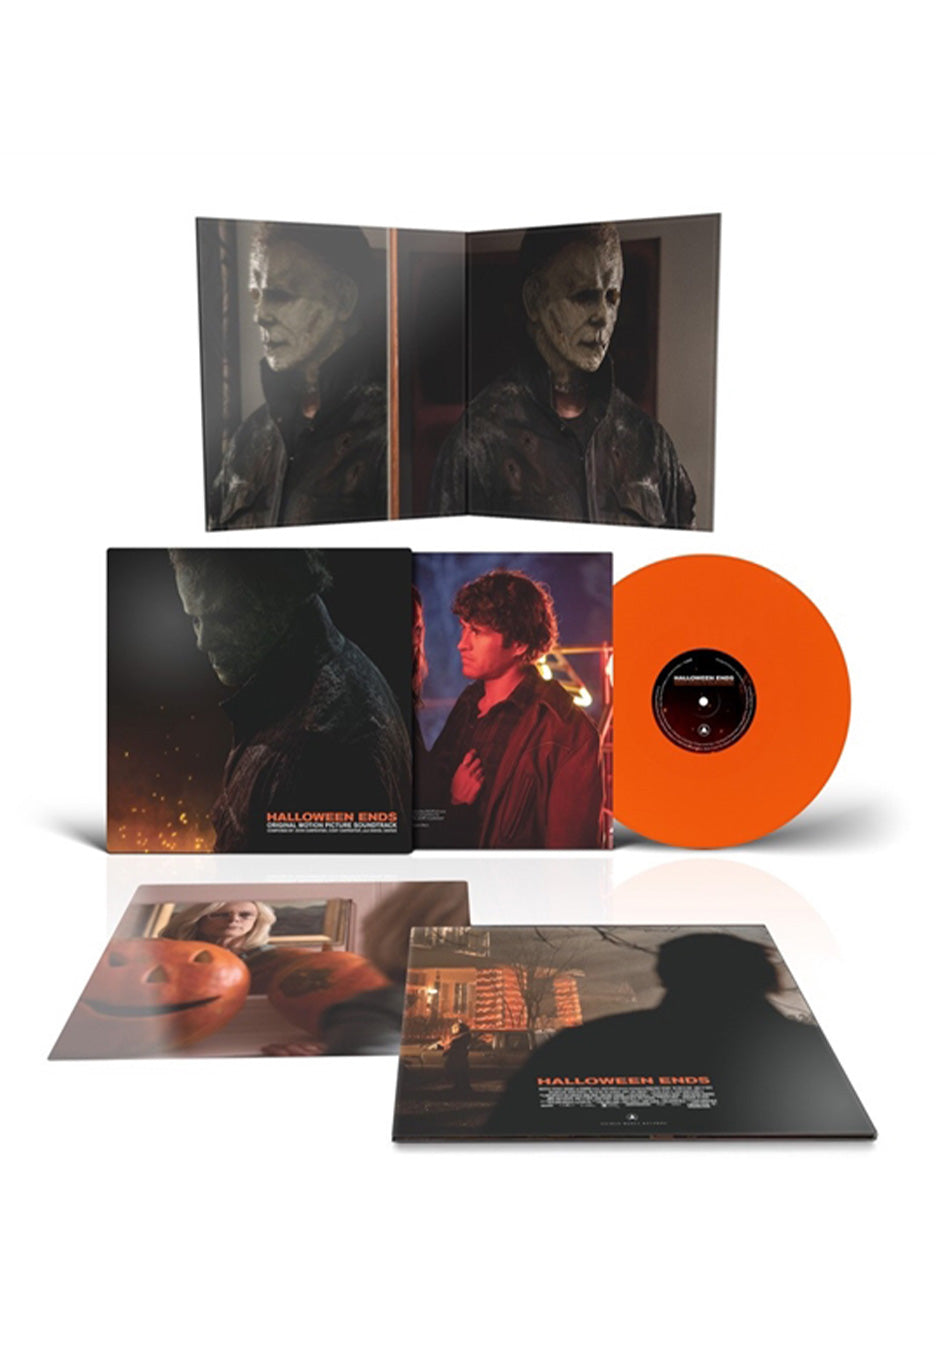 Halloween - Halloween Ends: OST (John Carpenter/Cody Carpenter/Daniel Davies) Ltd. Orange - Colored Vinyl